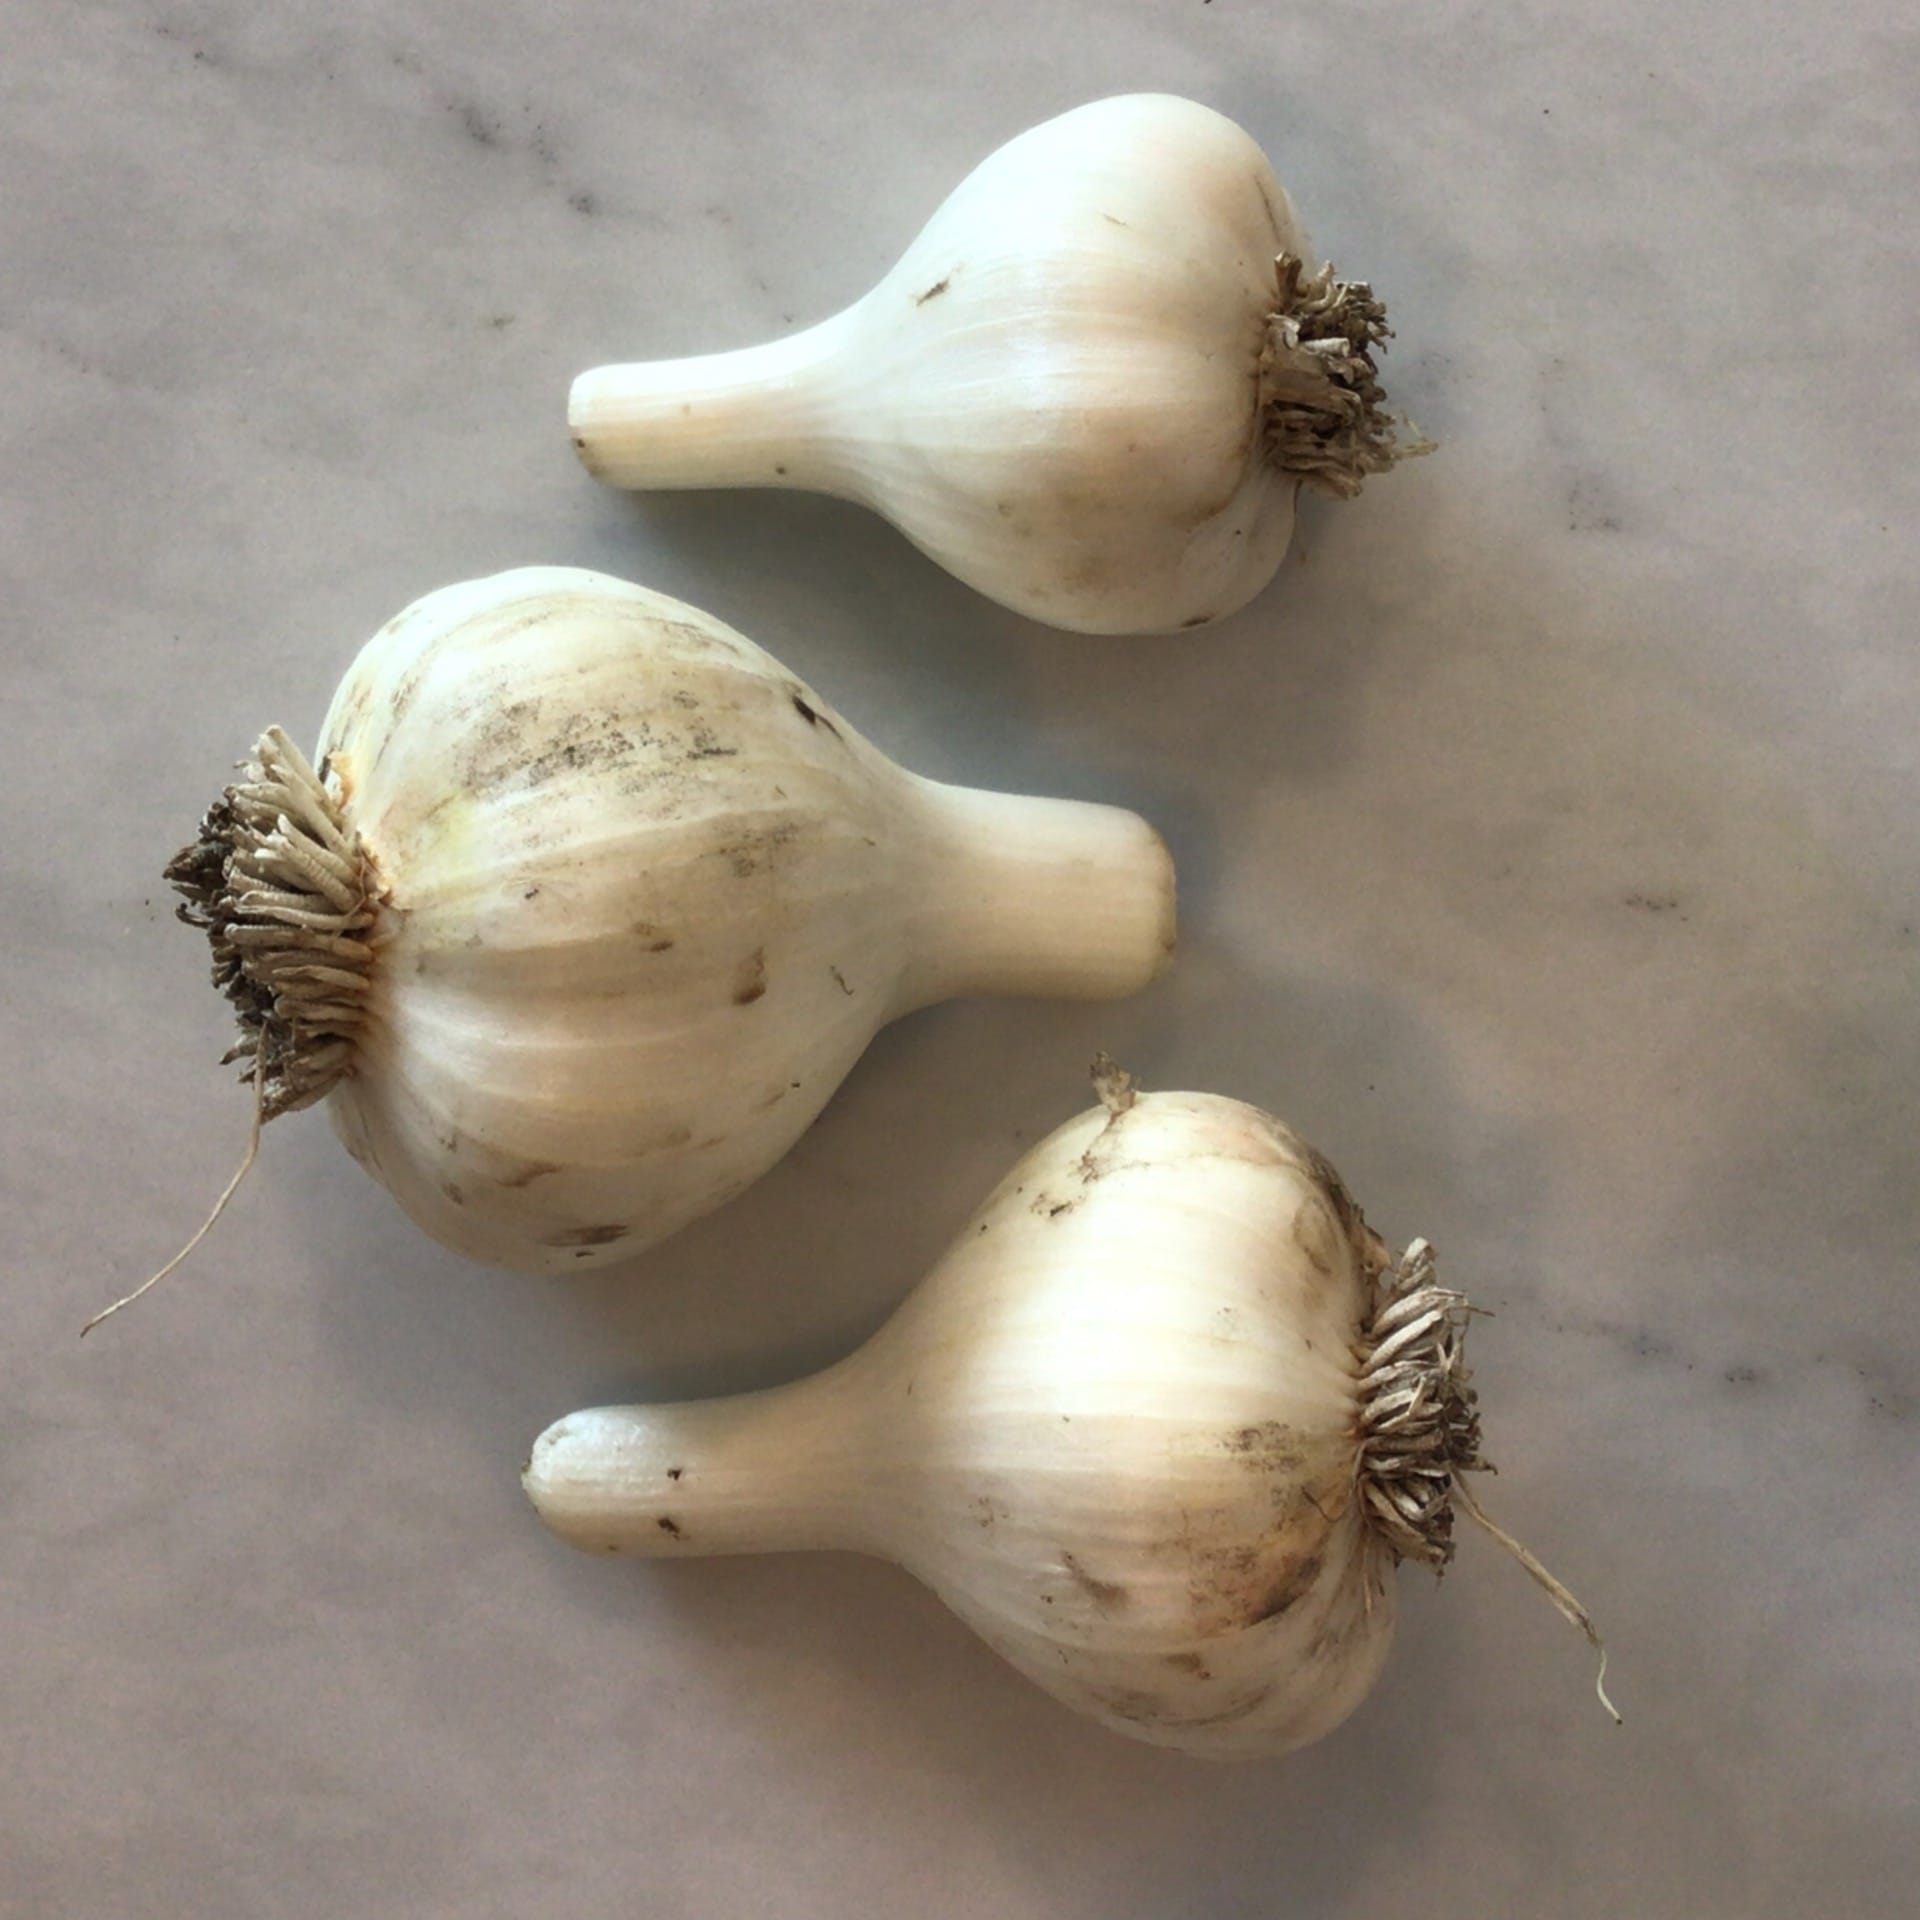 sold out fresh garlic bulbs